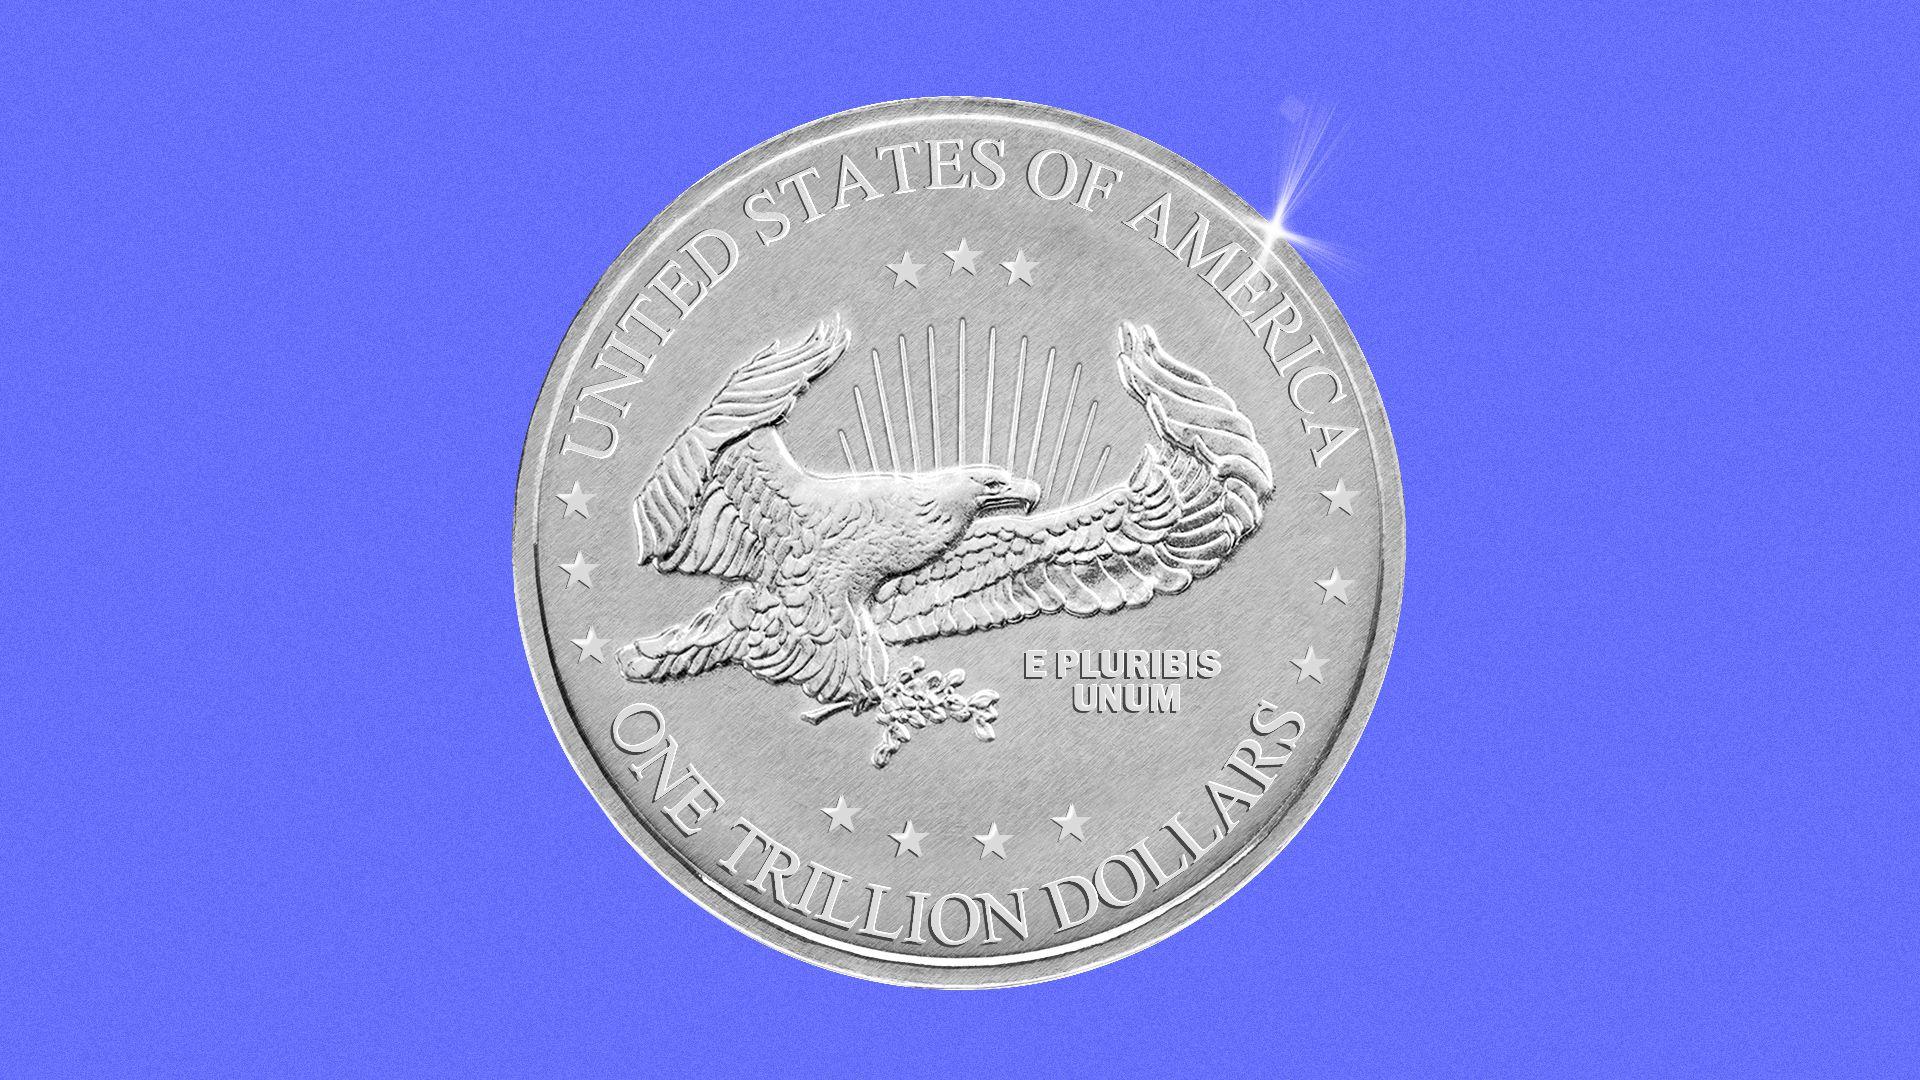 تصویر فول اچ دی full HD سکه نقره ای با عکس عقاب و بک گراند بنفش 